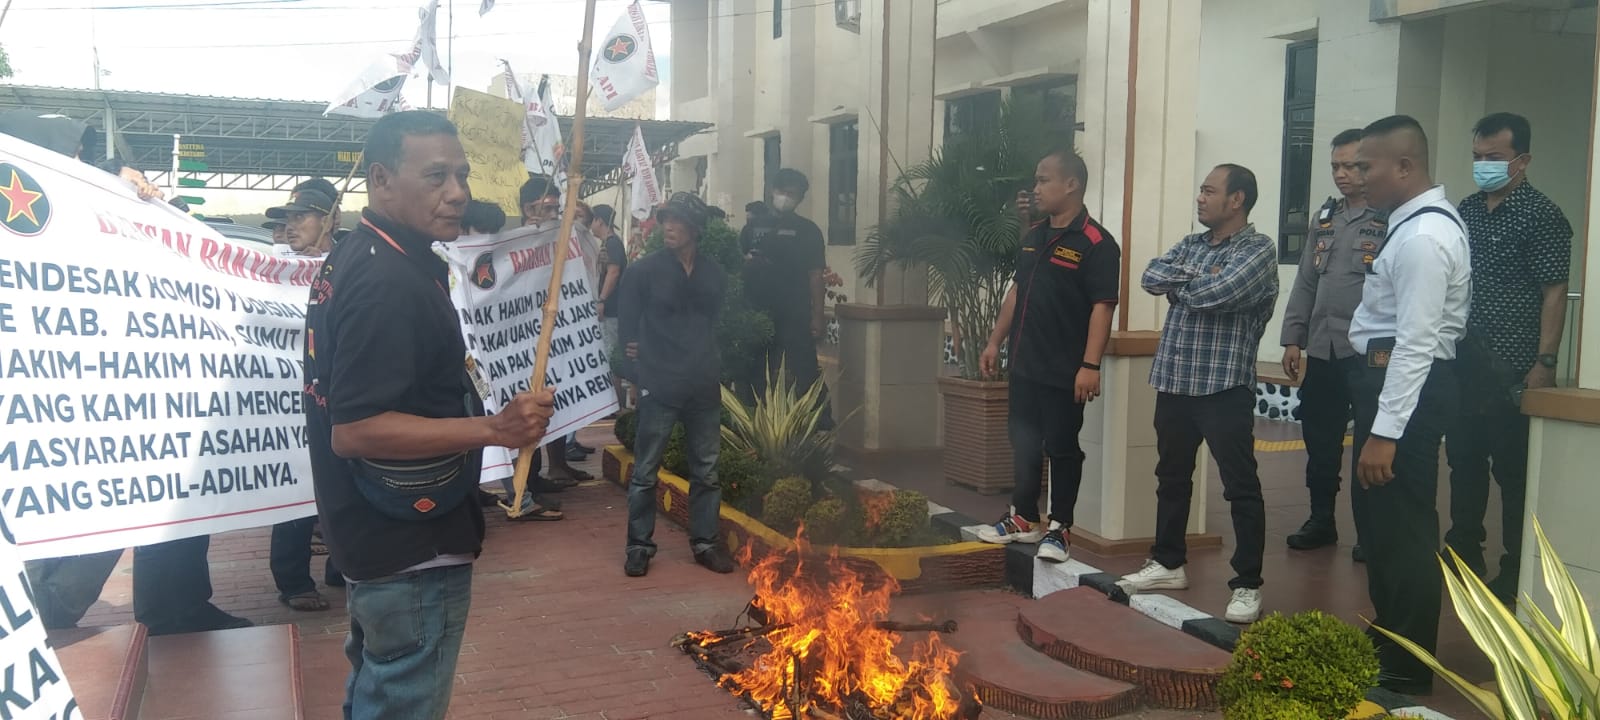 Gelar Aksi Unjuk Rasa Berdarah, Bara Api dan PMPRI Beberkan Dugaan Jaksa Nakal di Kejari Asahan